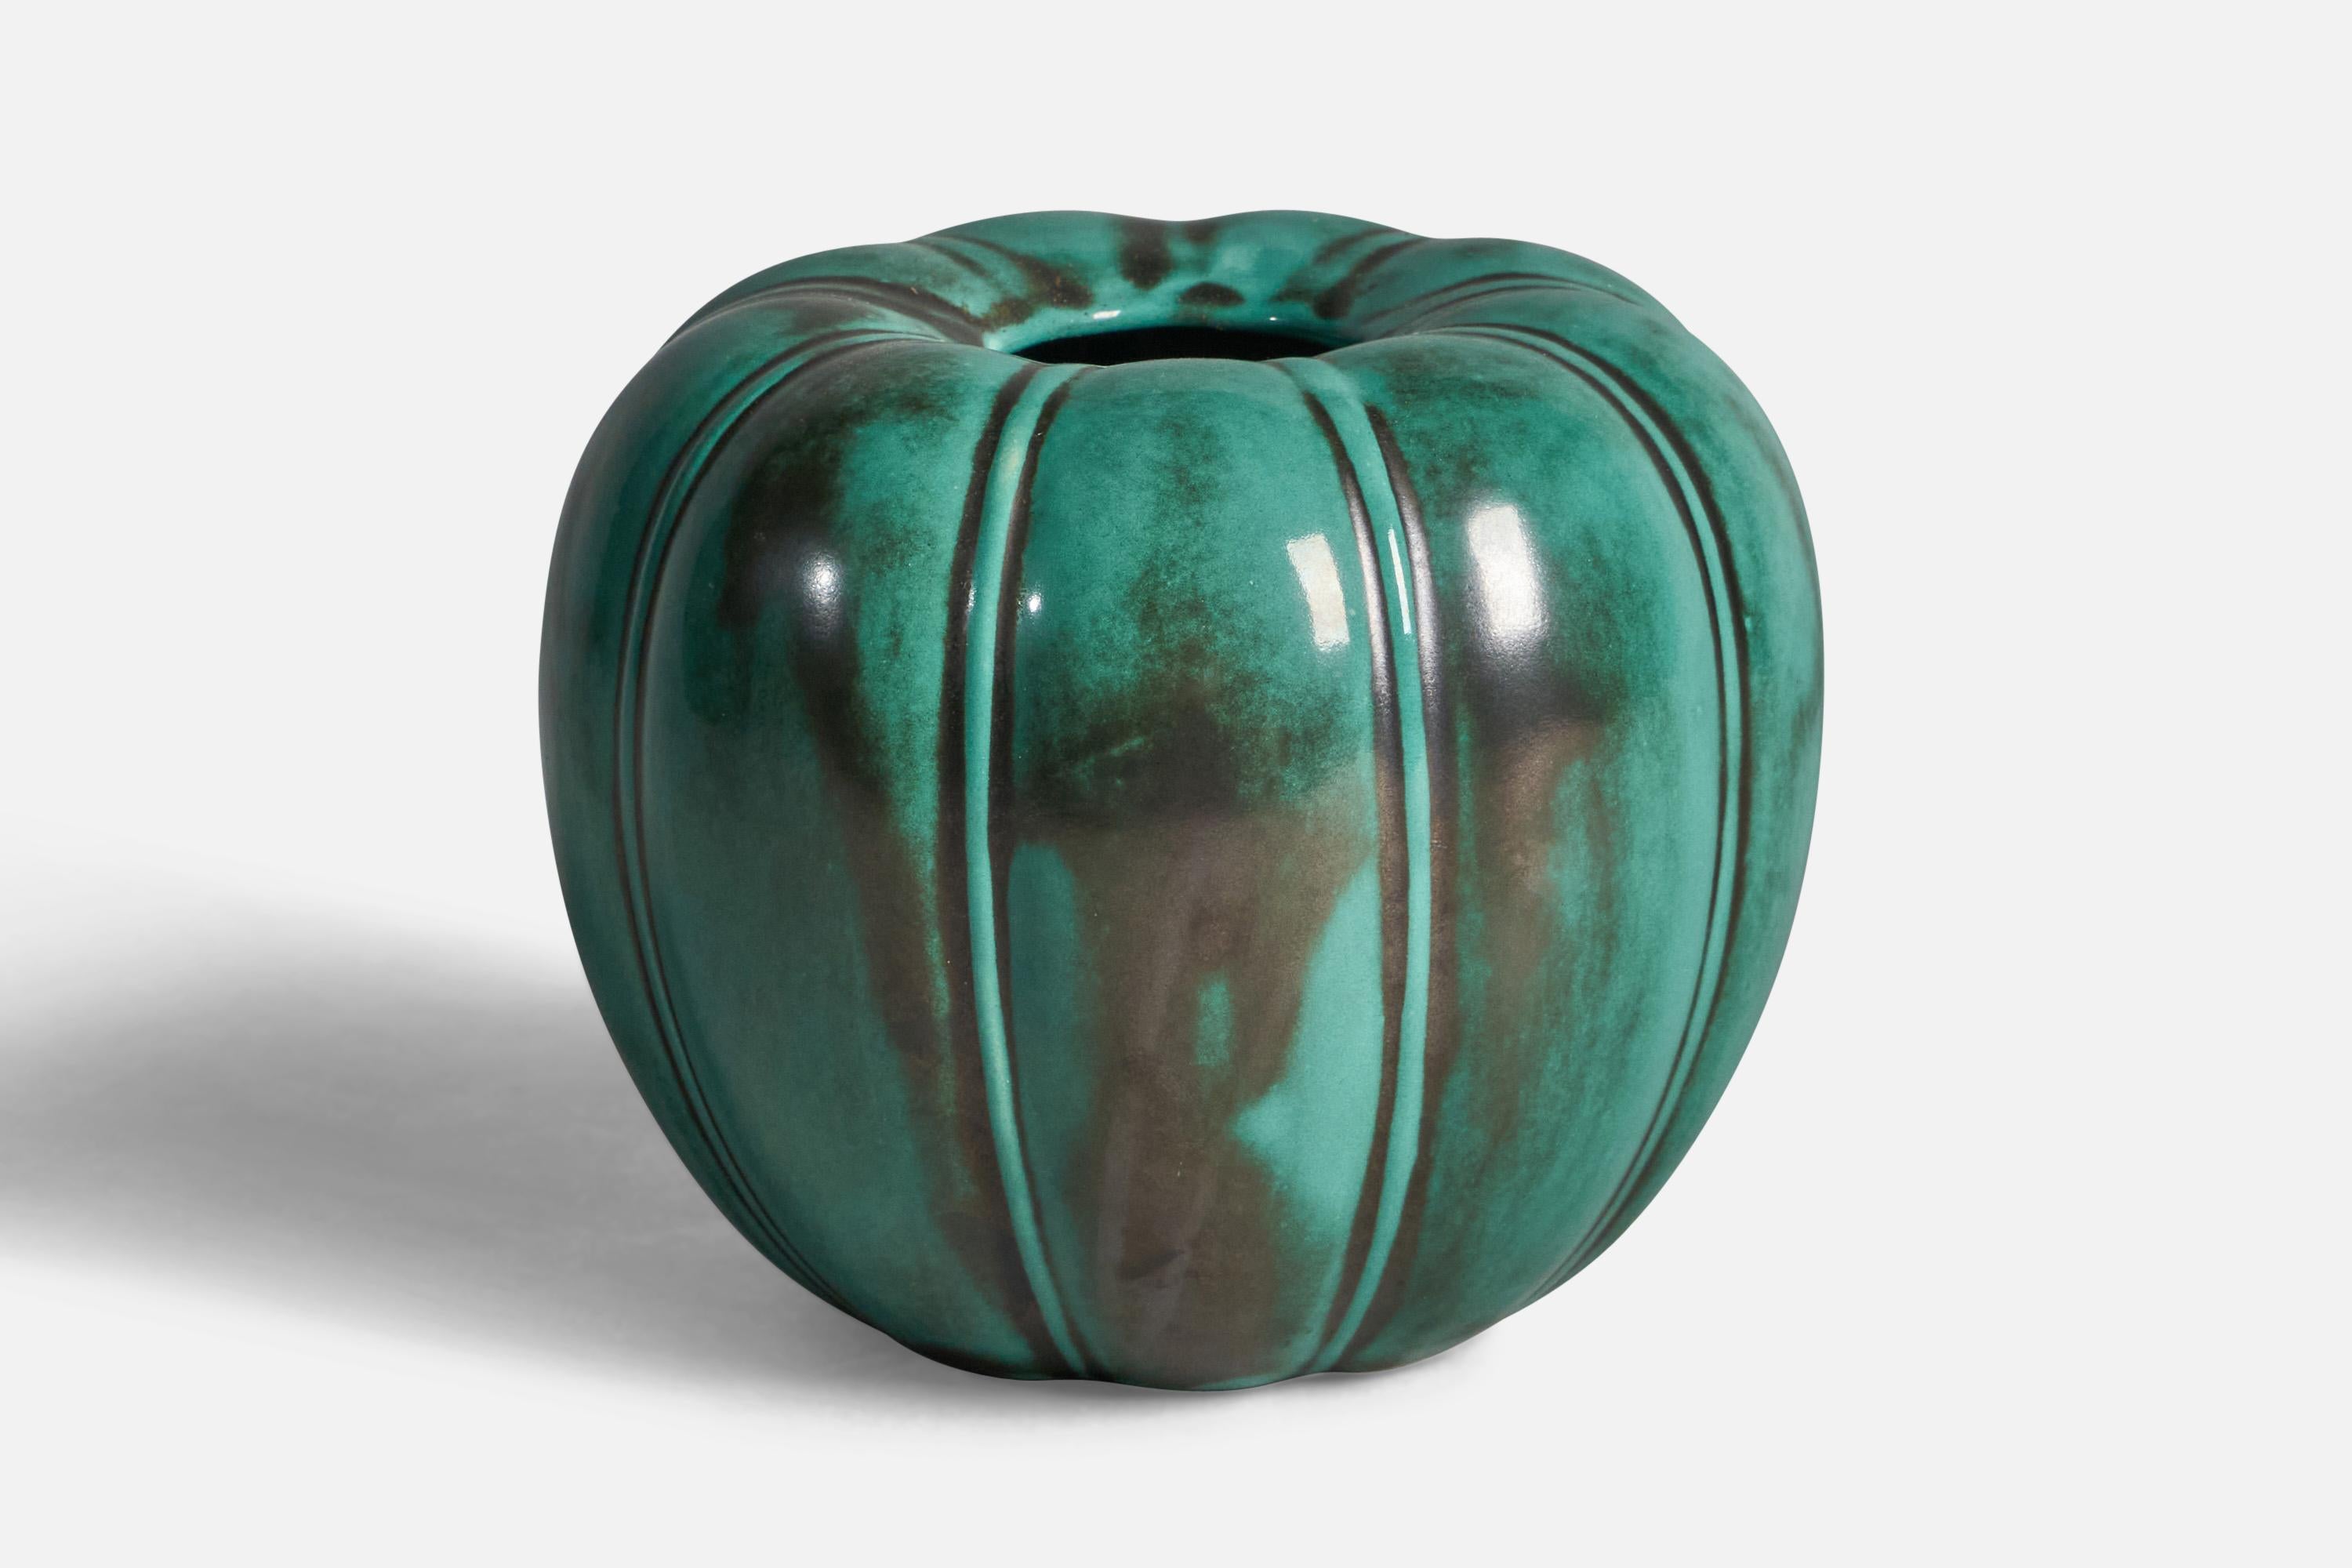 A fluted green-glazed earthenware vase, designed and produced by Upsala Ekeby, Sweden, 1930s